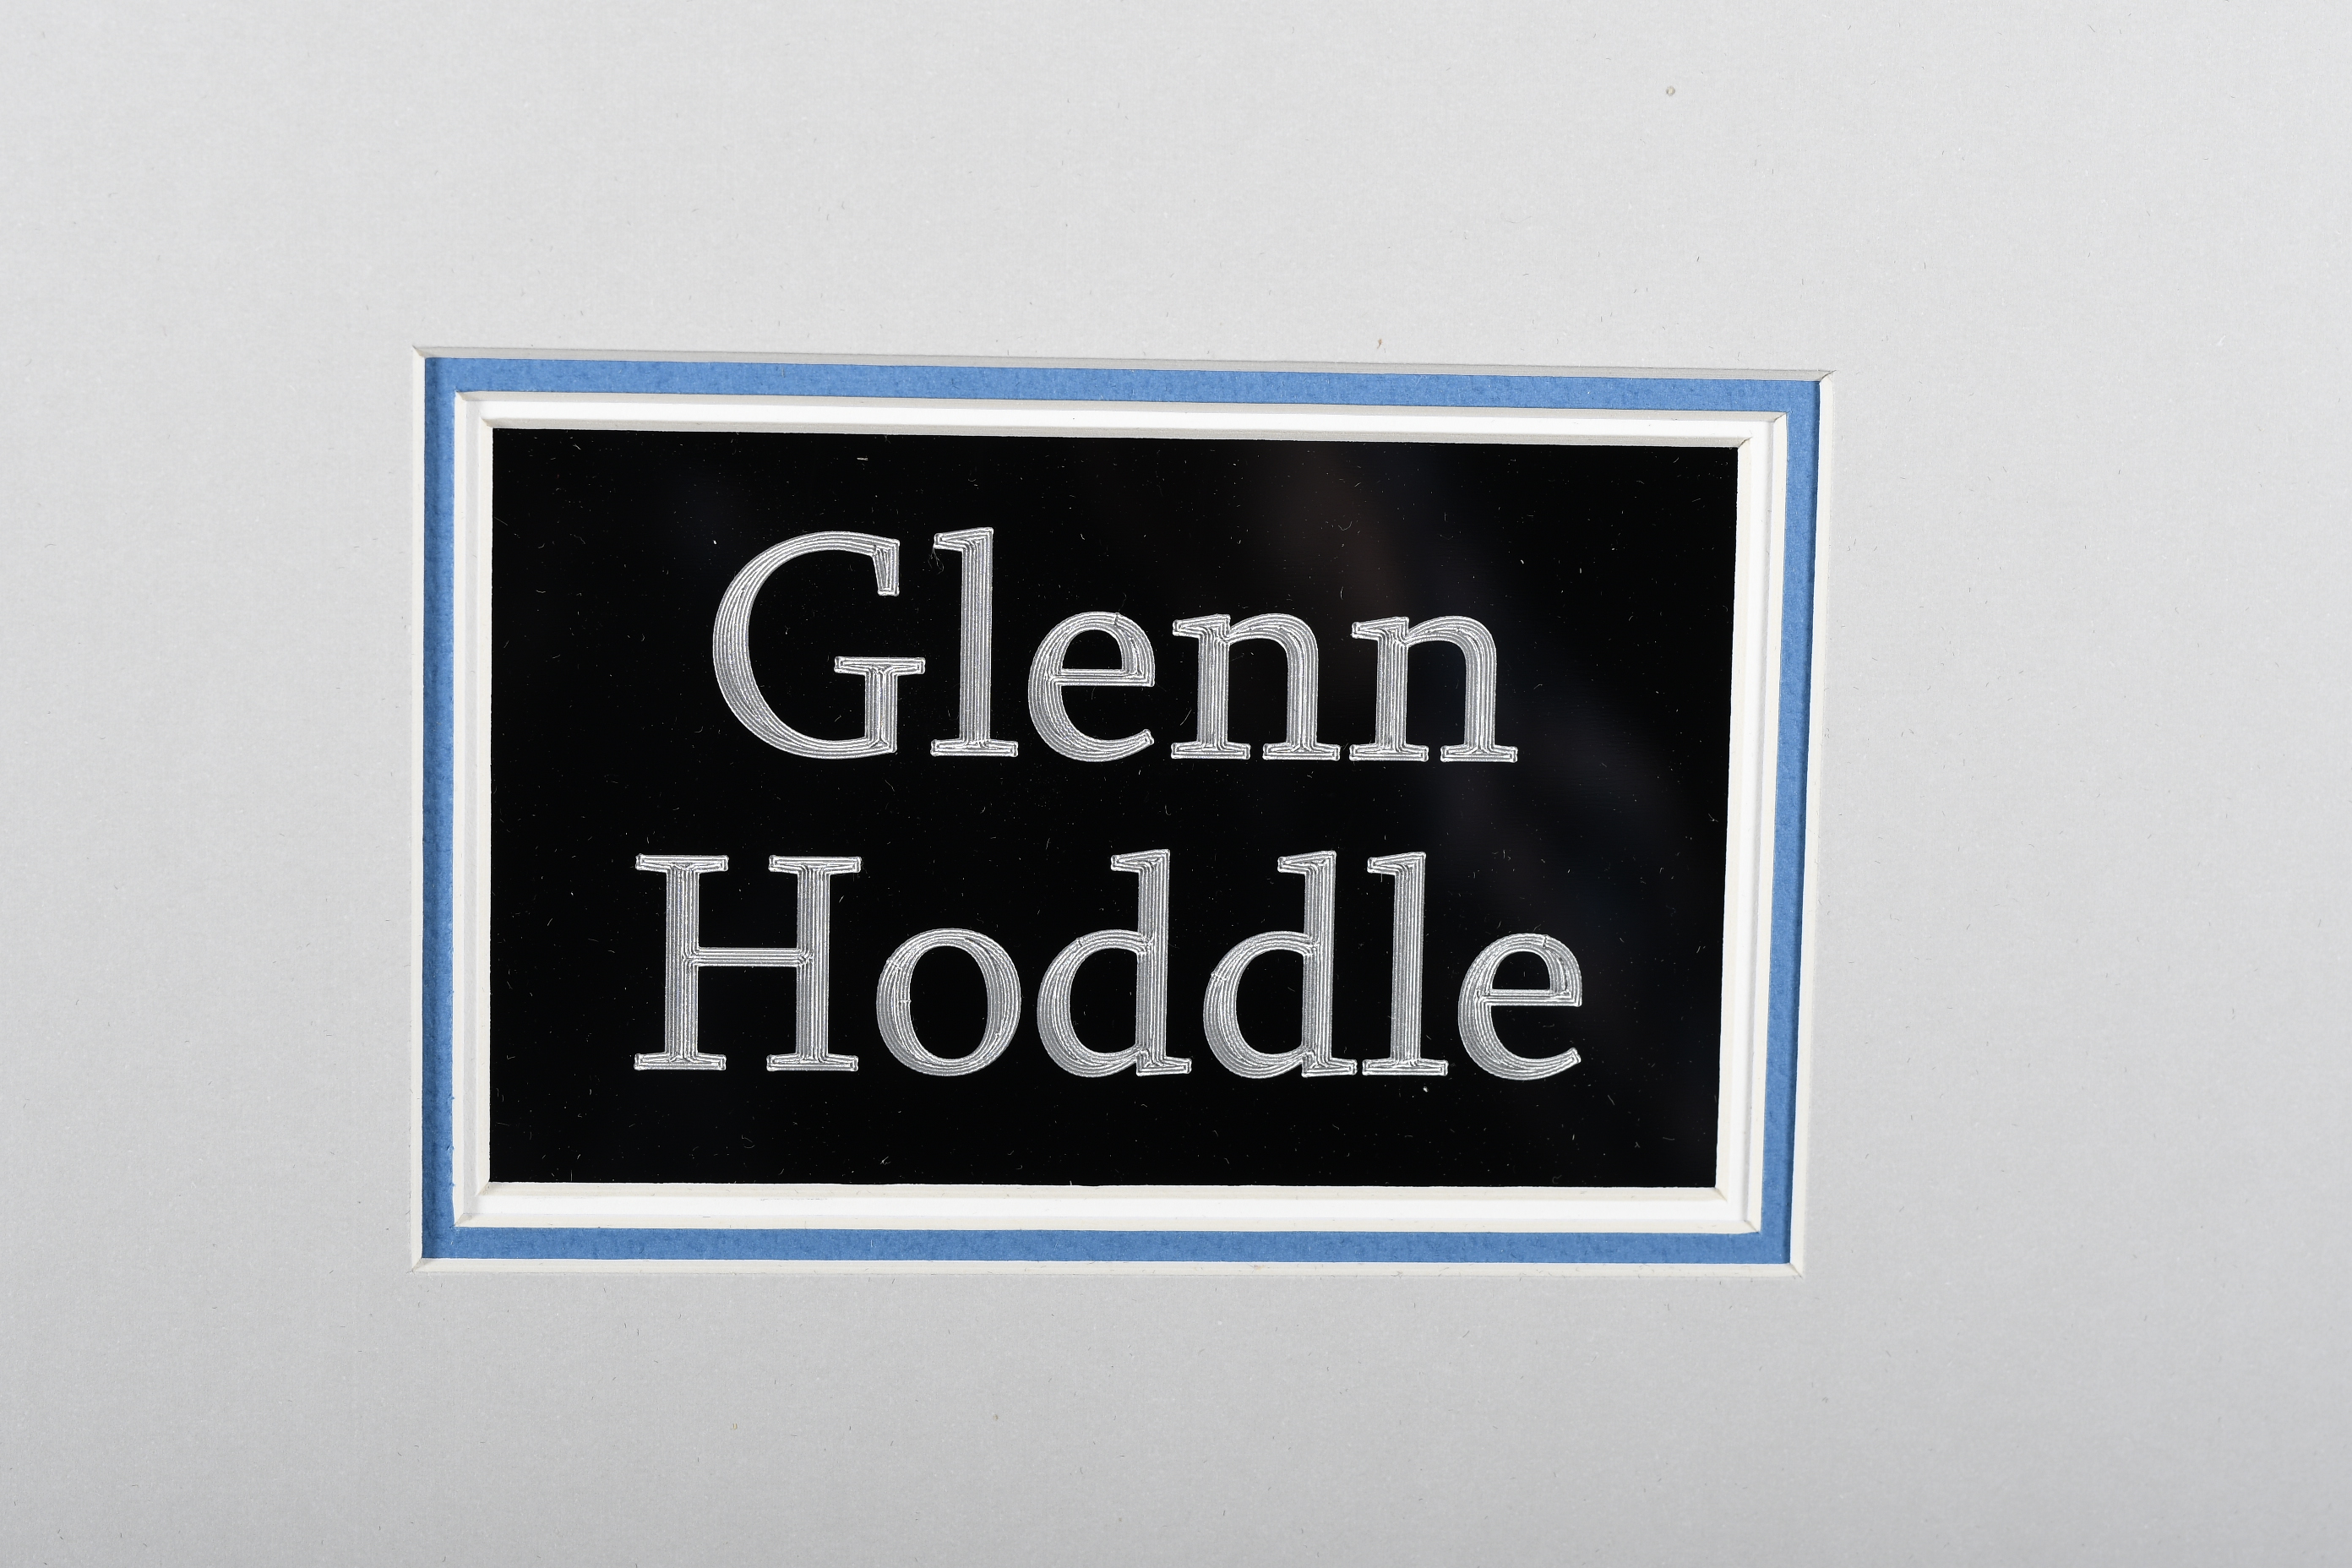 Glen Hoddle Chelsea - Image 3 of 3